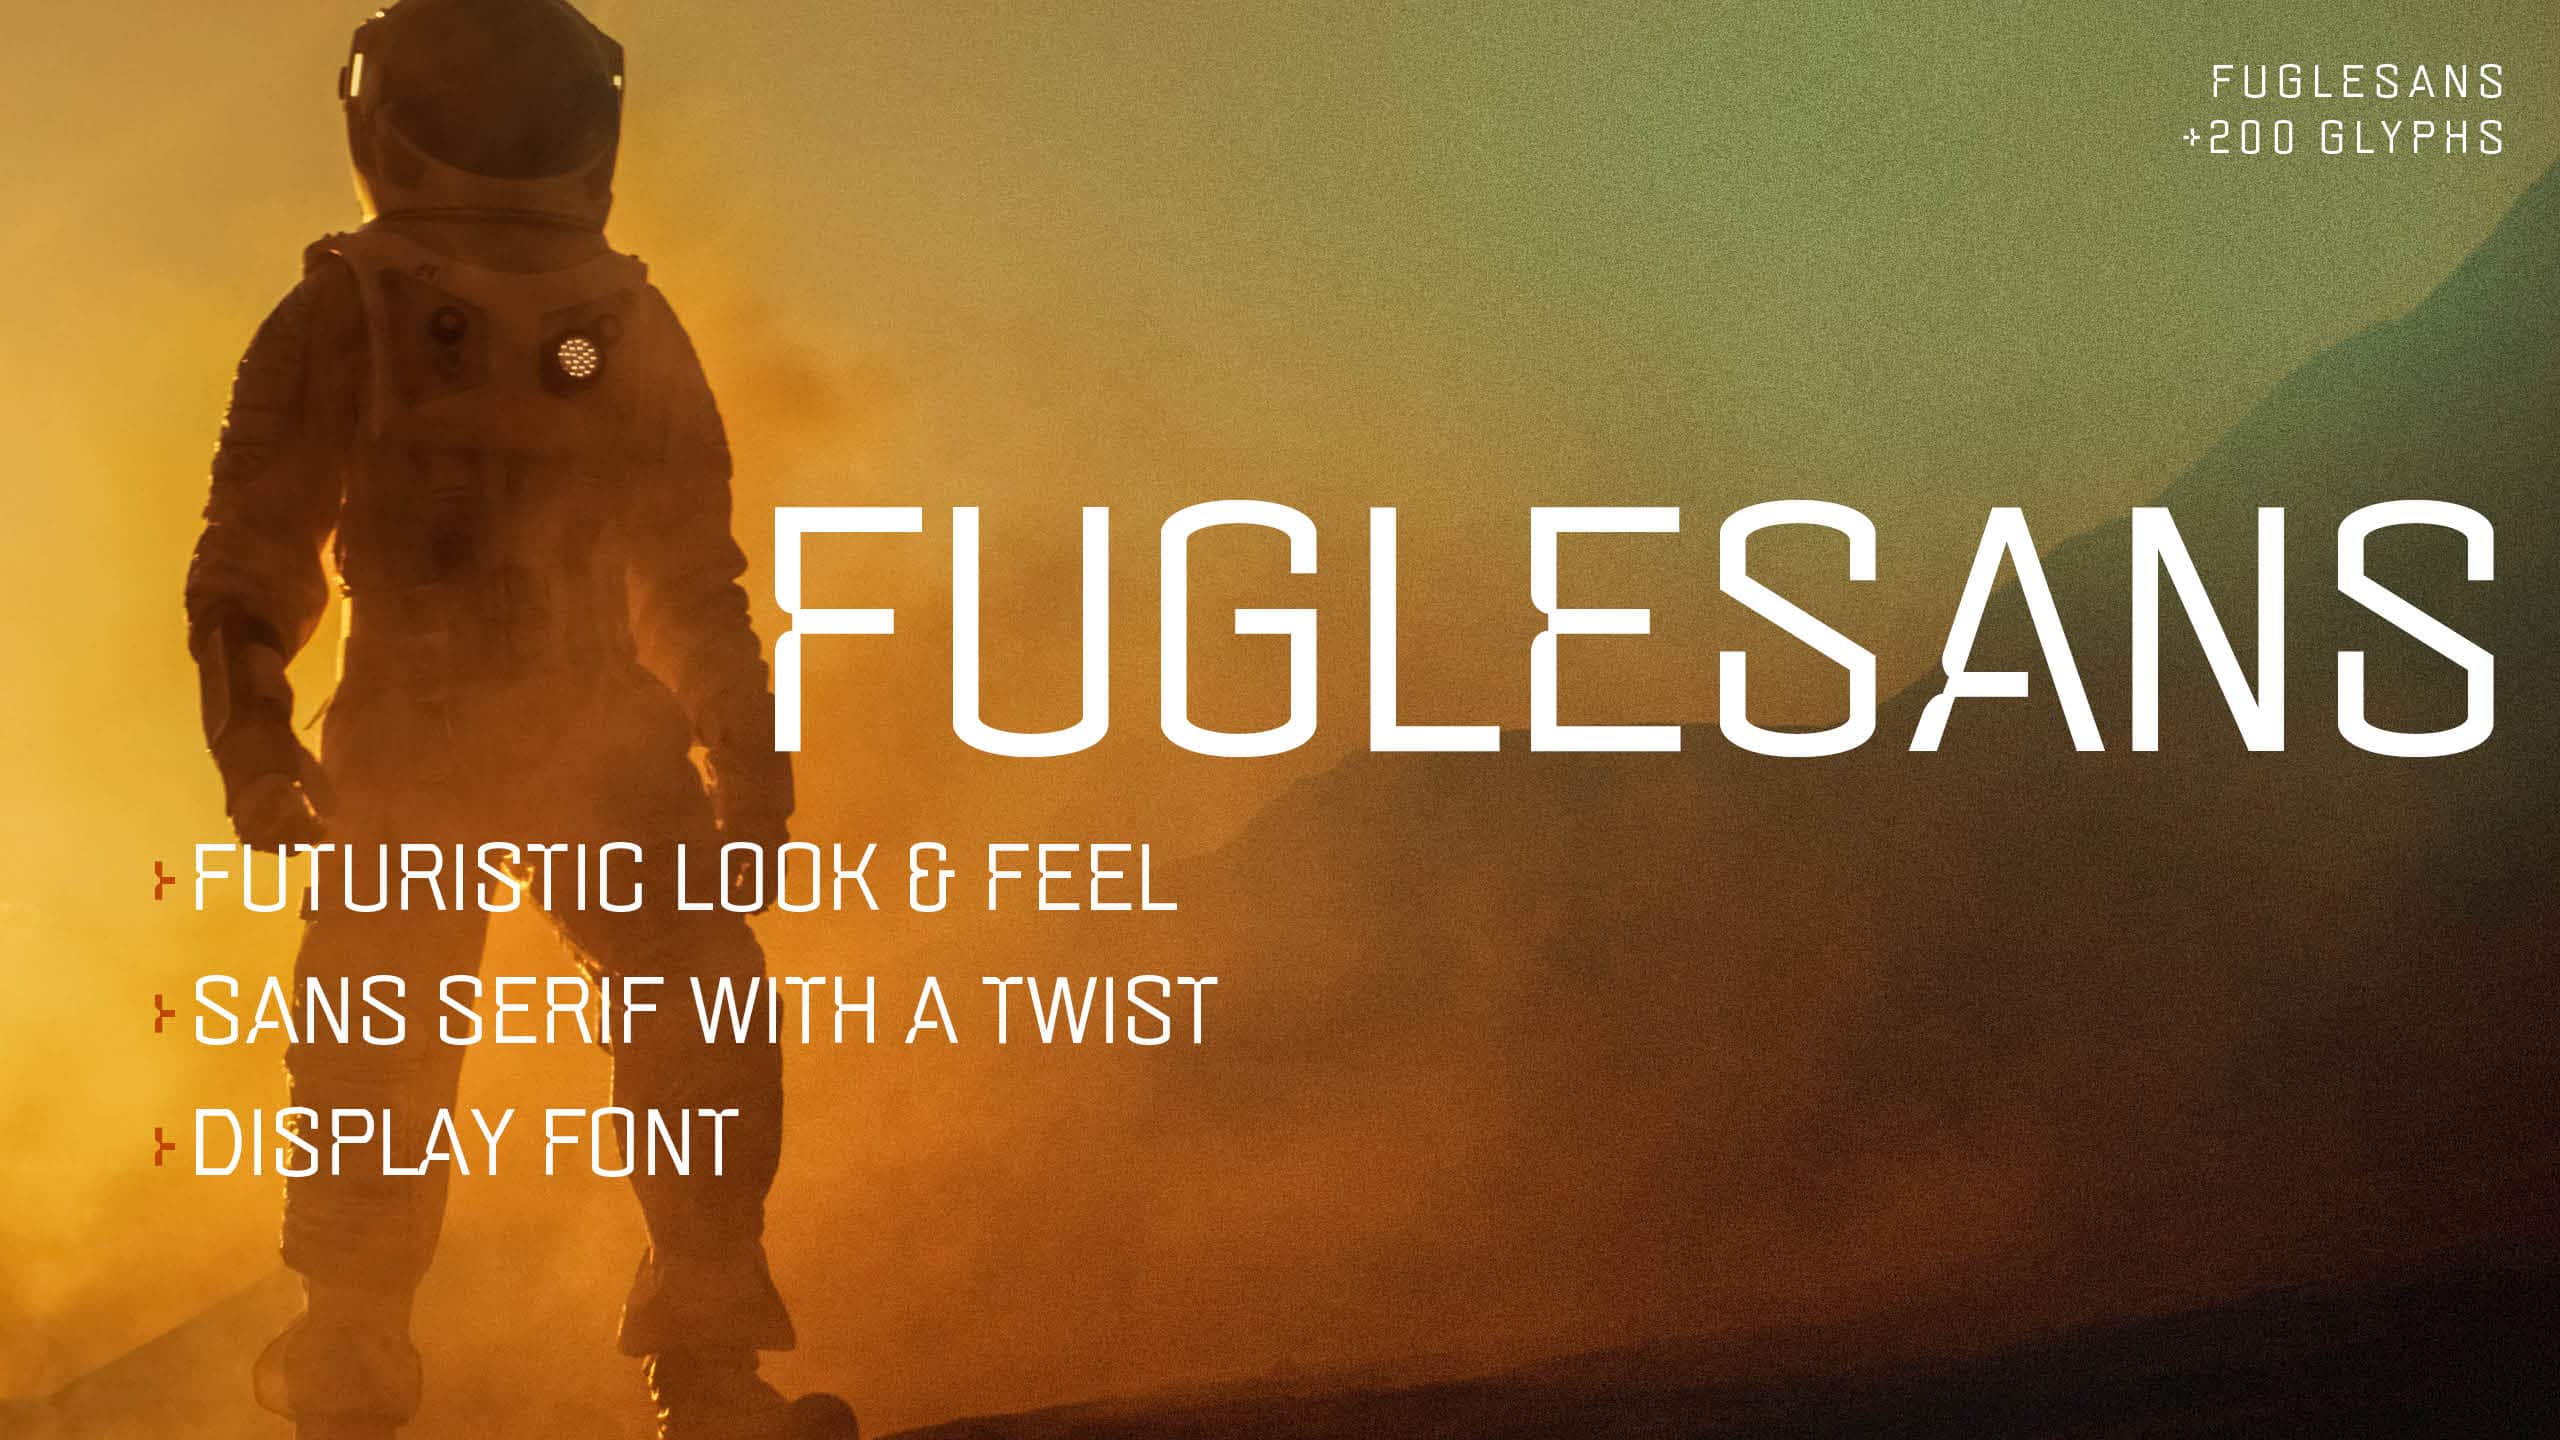 Marketing image for the font Fuglesans, concept image.